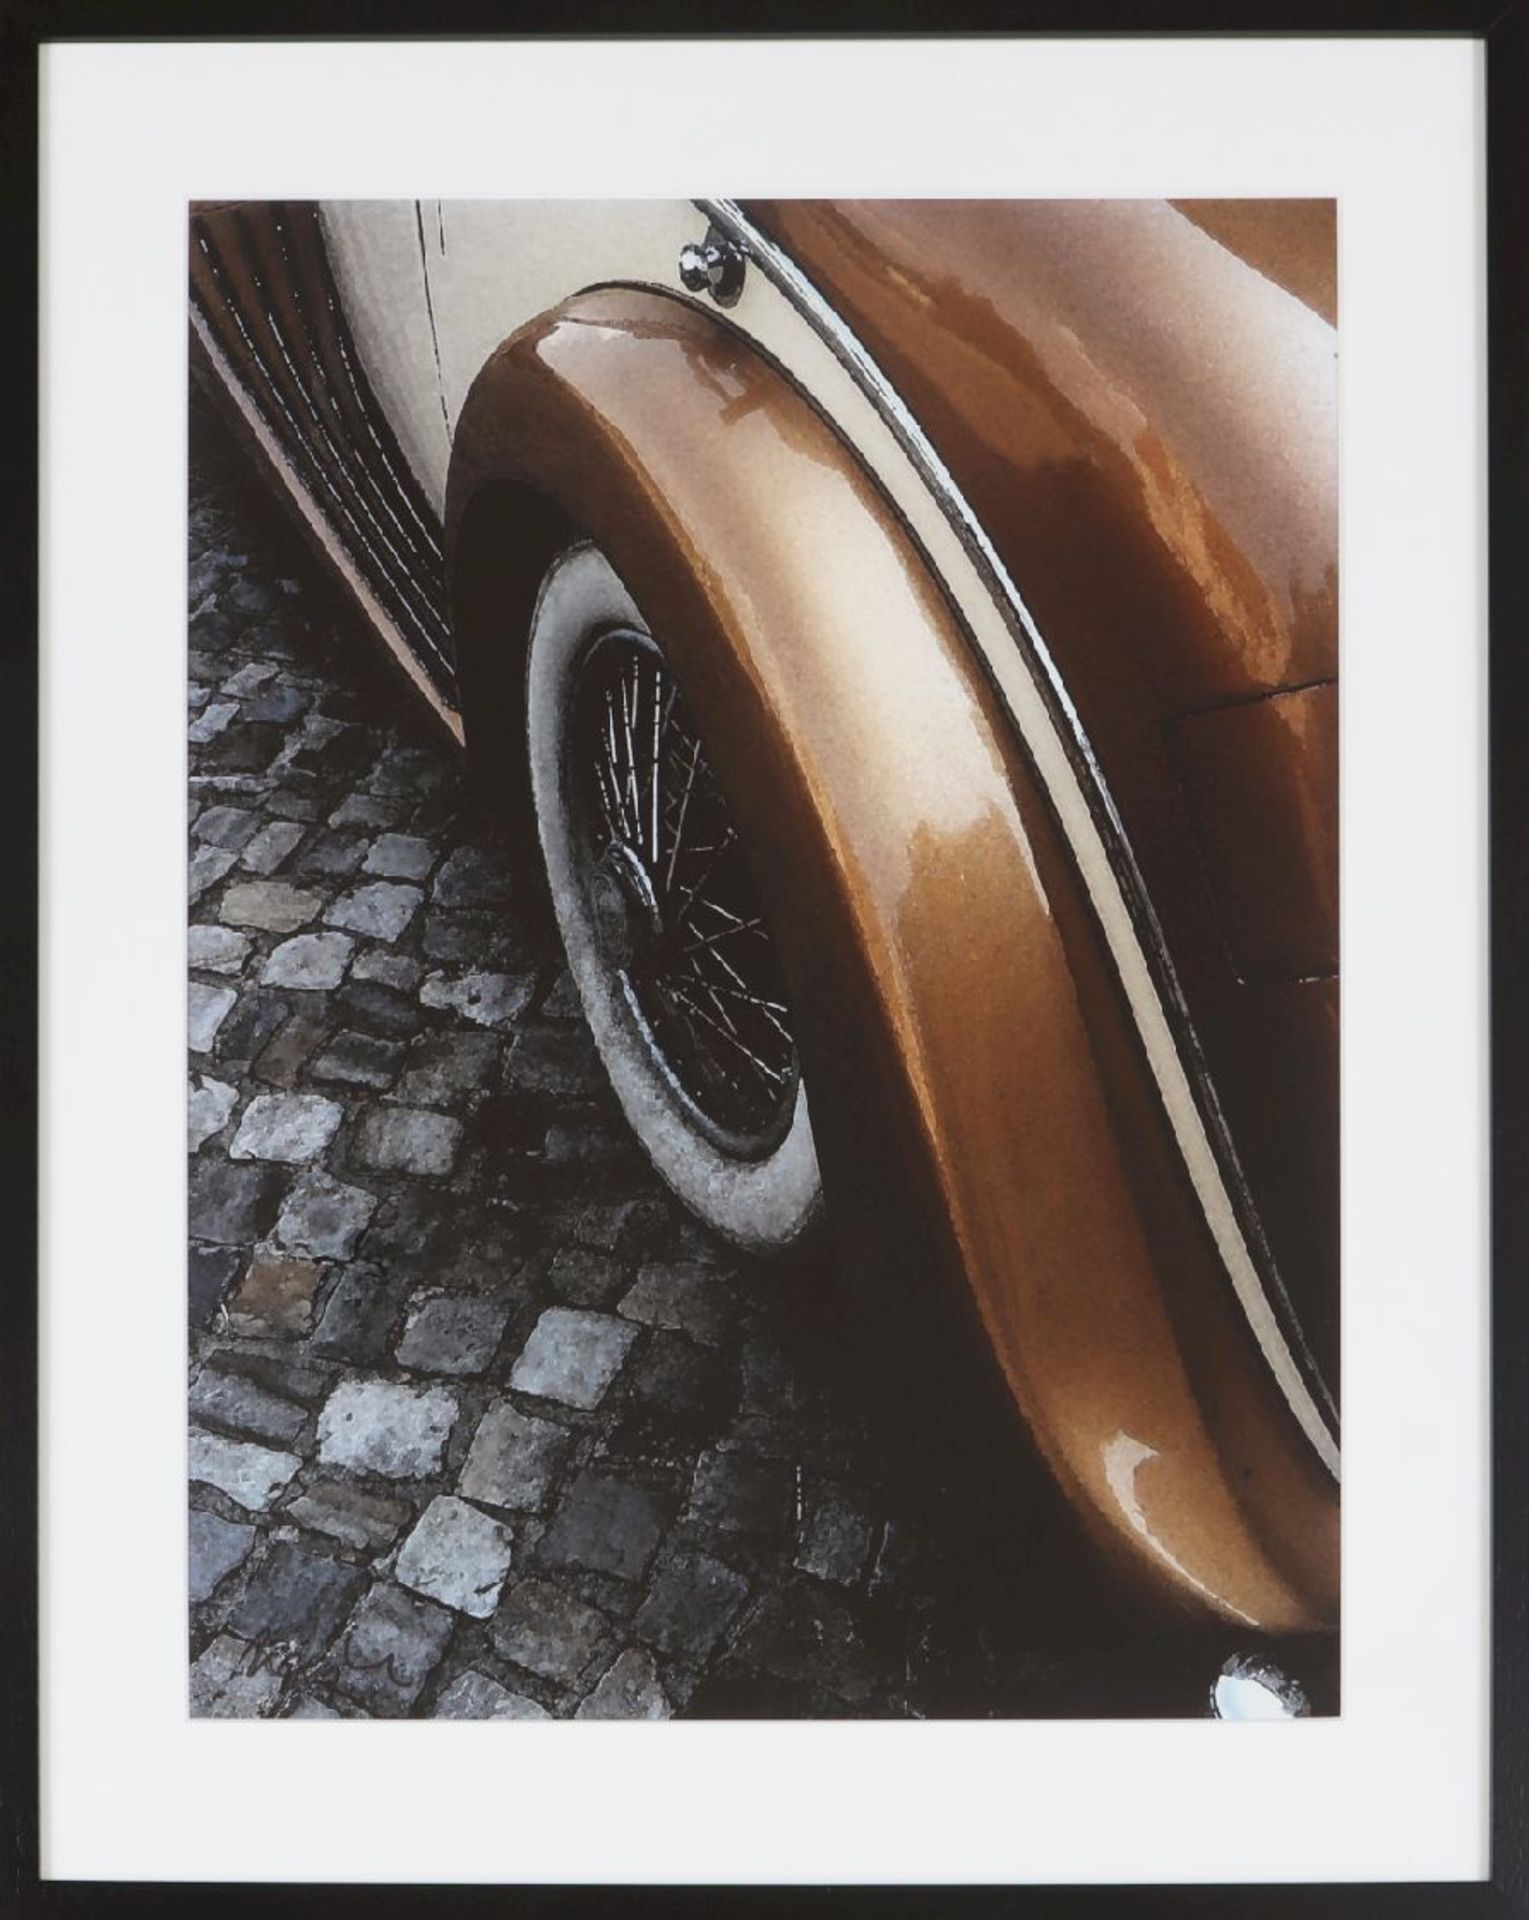 GEORG NAUJOK (Zeitgenössischer Hamburger Fotograf)Farbfotografie, ¨It´s a Rolls Royce Phantom (